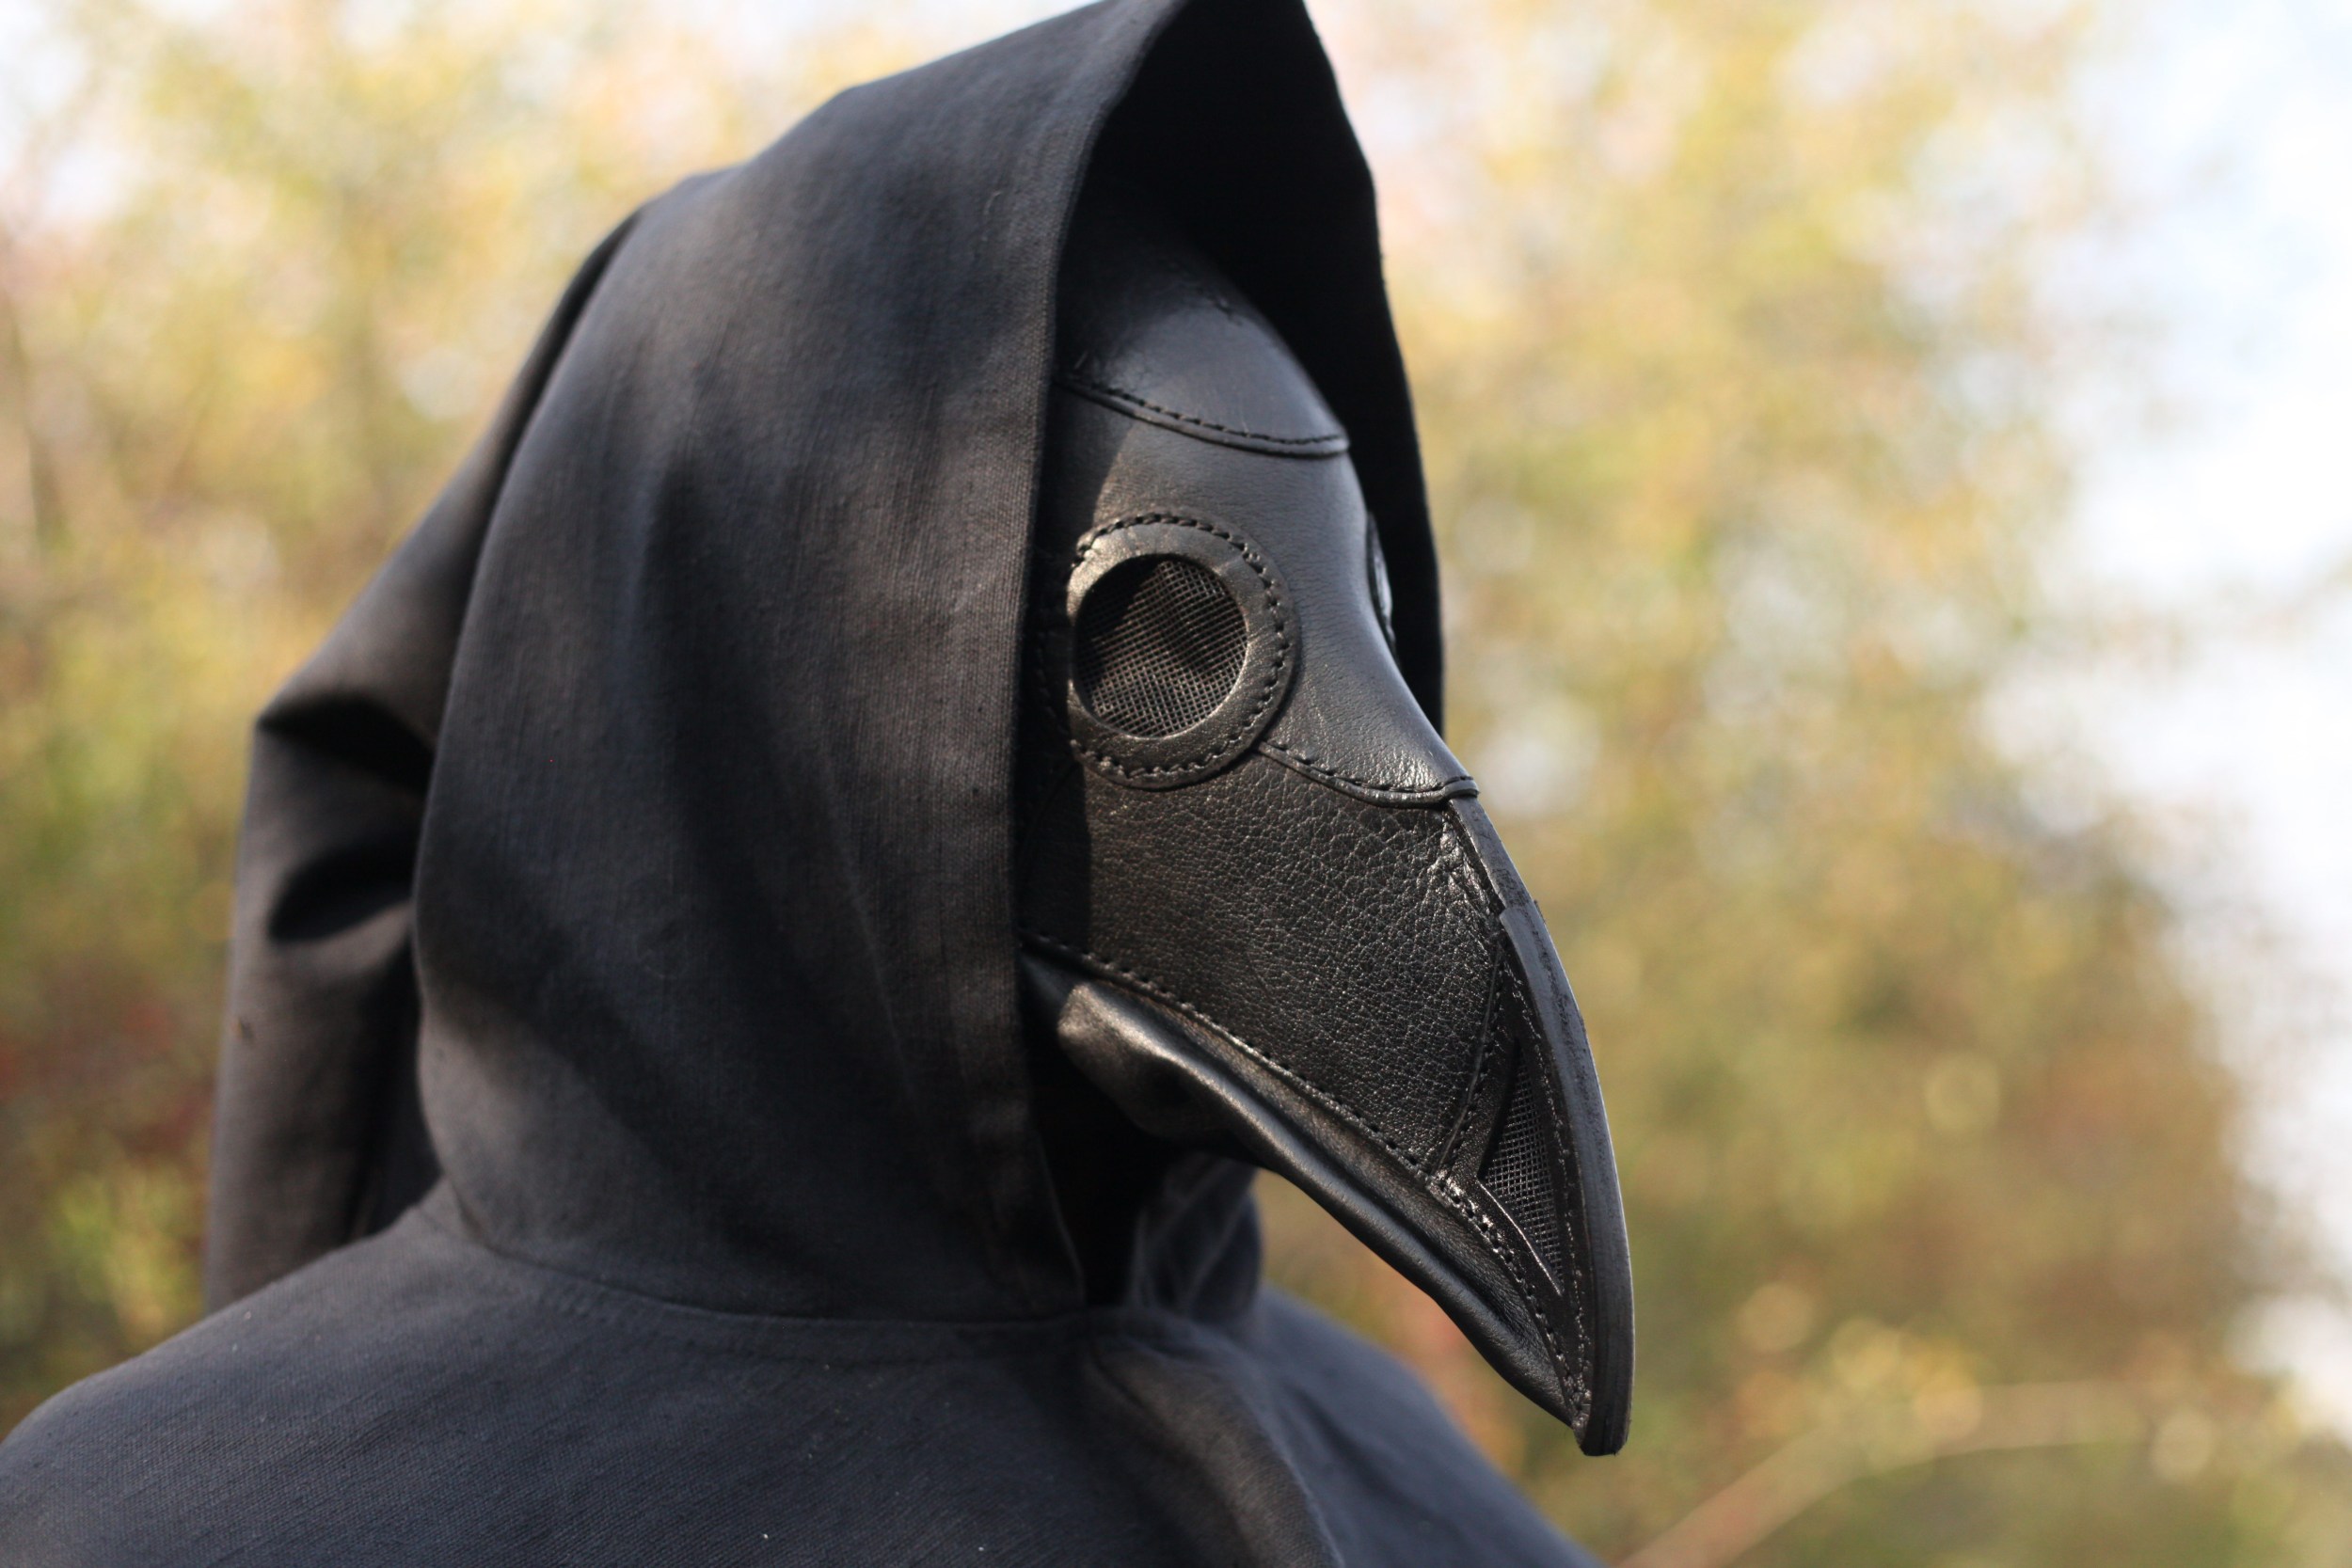 Masque de médecin de la peste Masque de médecin de la peste en cuir Costume  de médecin de la peste Masque de la peste bubonique -  Canada